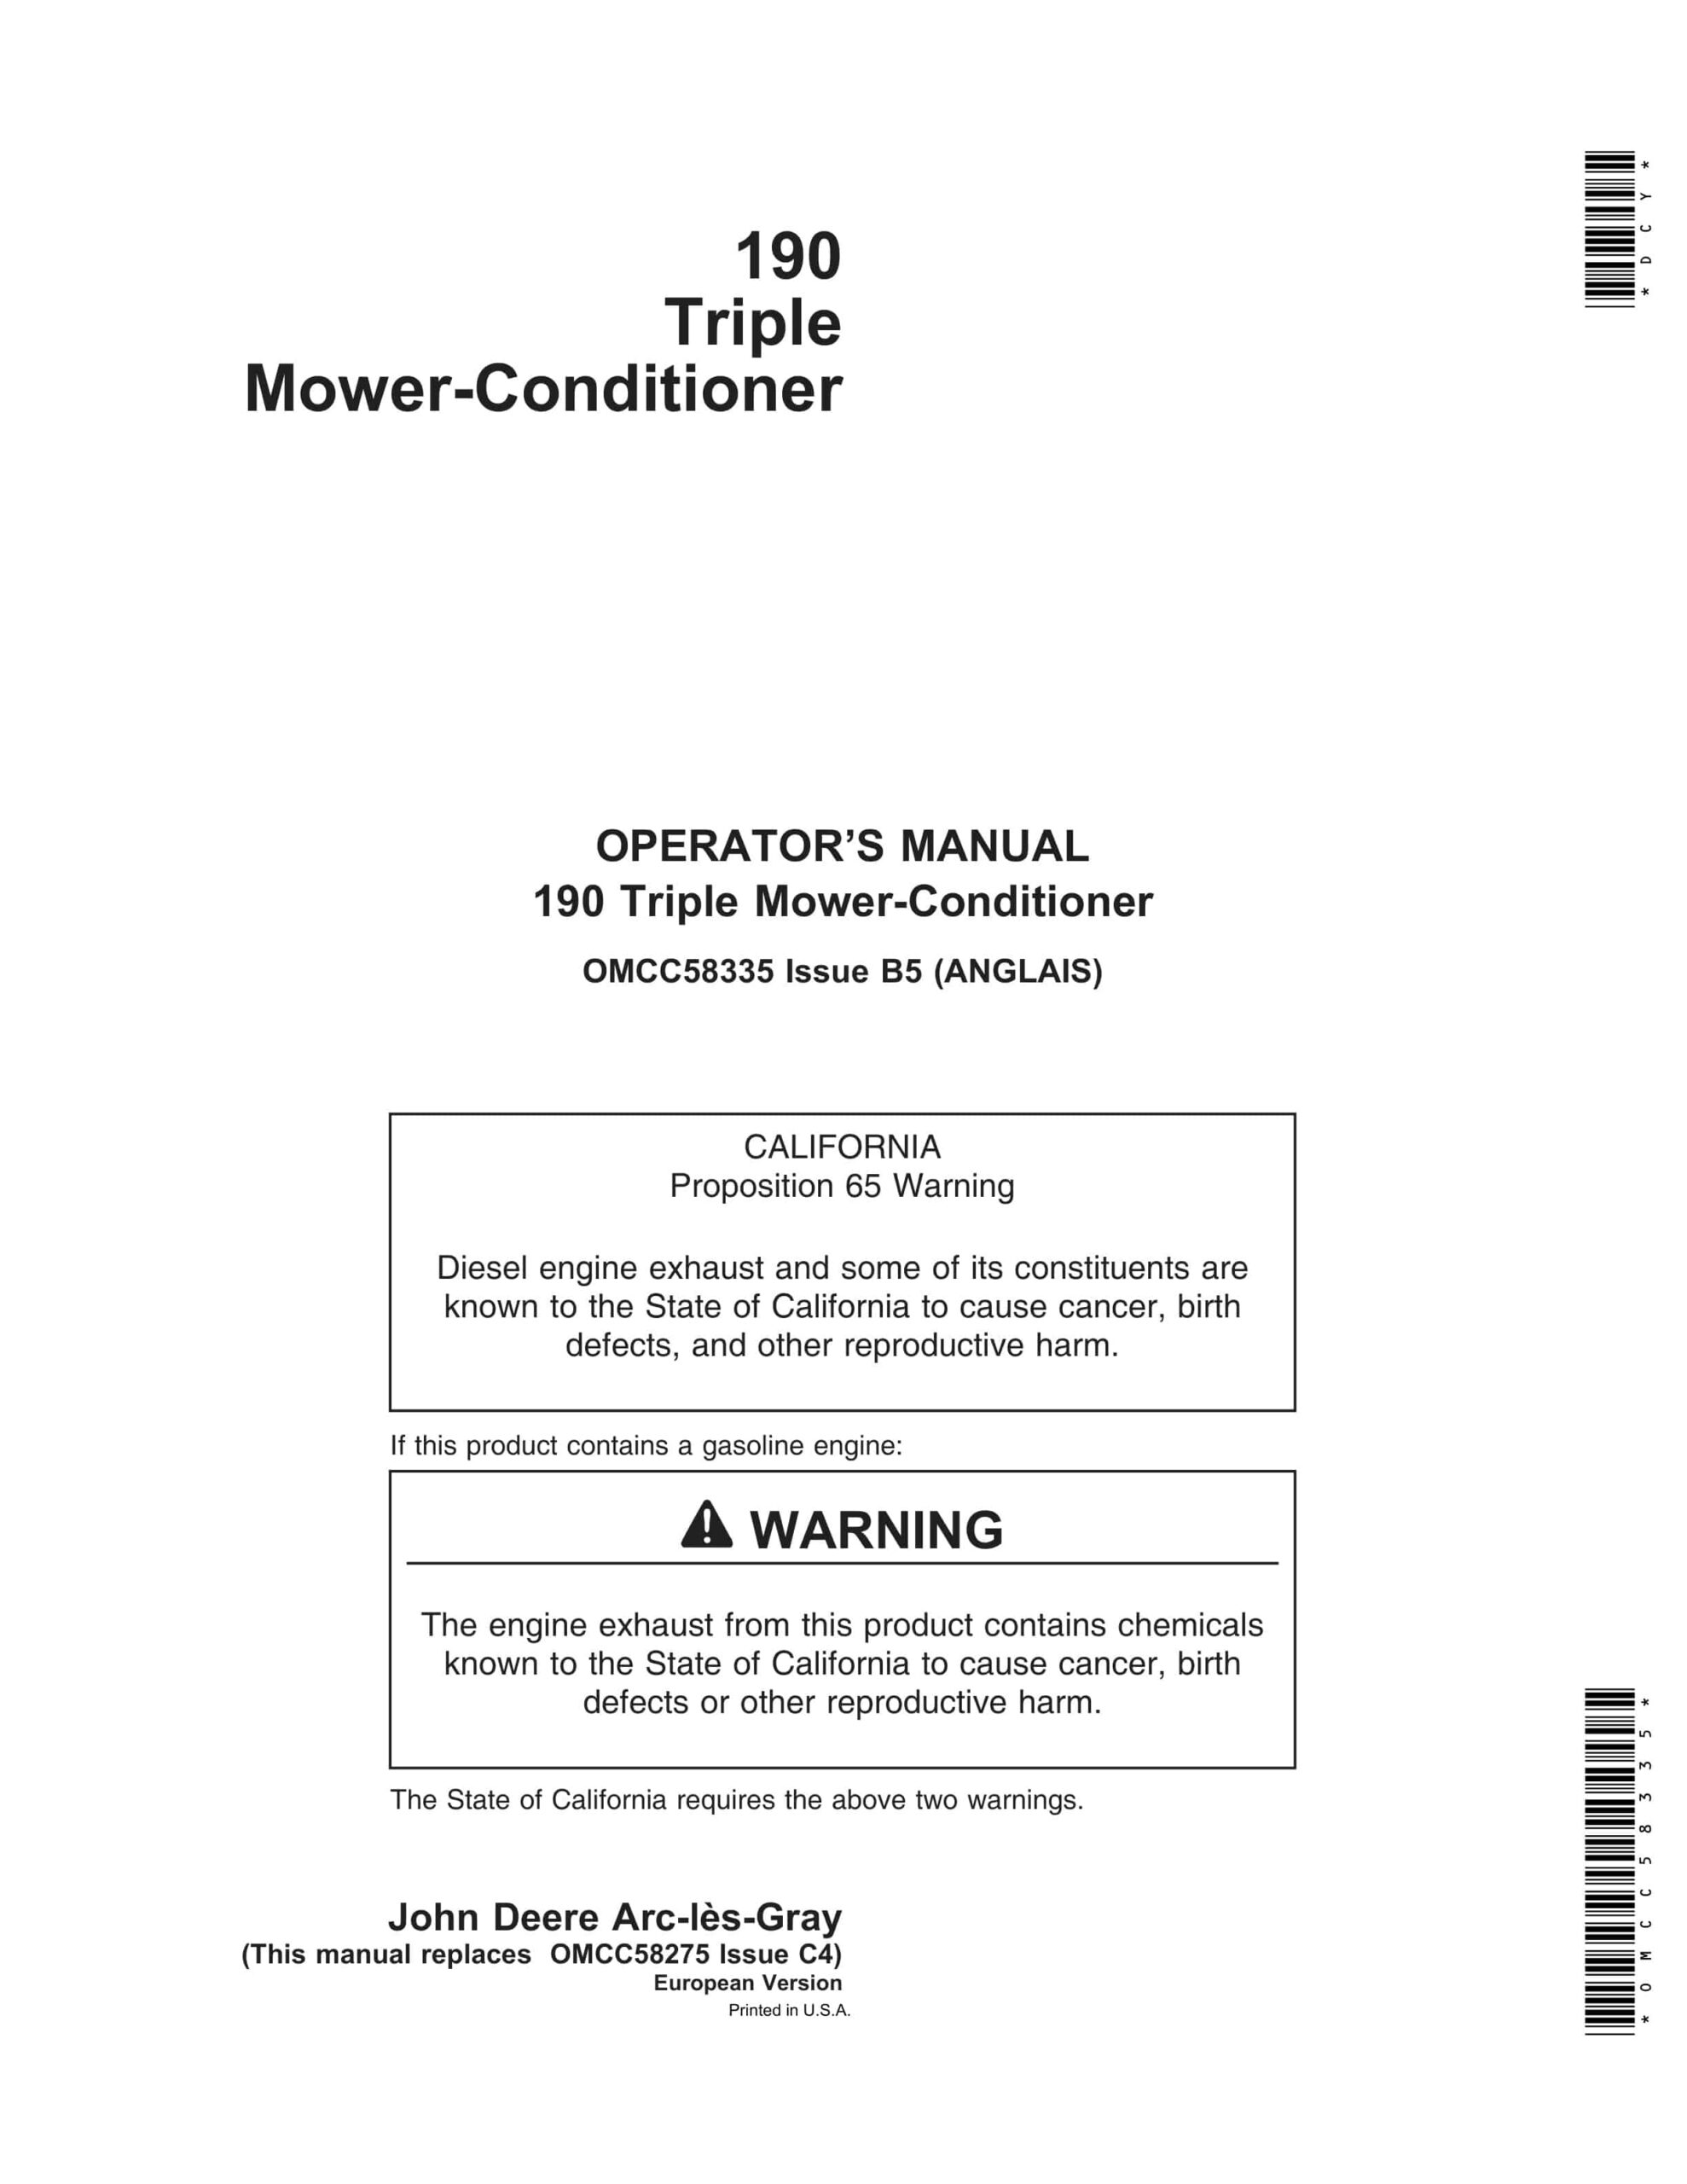 John Deere 190 Triple Mower-Conditioner Operator Manual OMCC58335-1